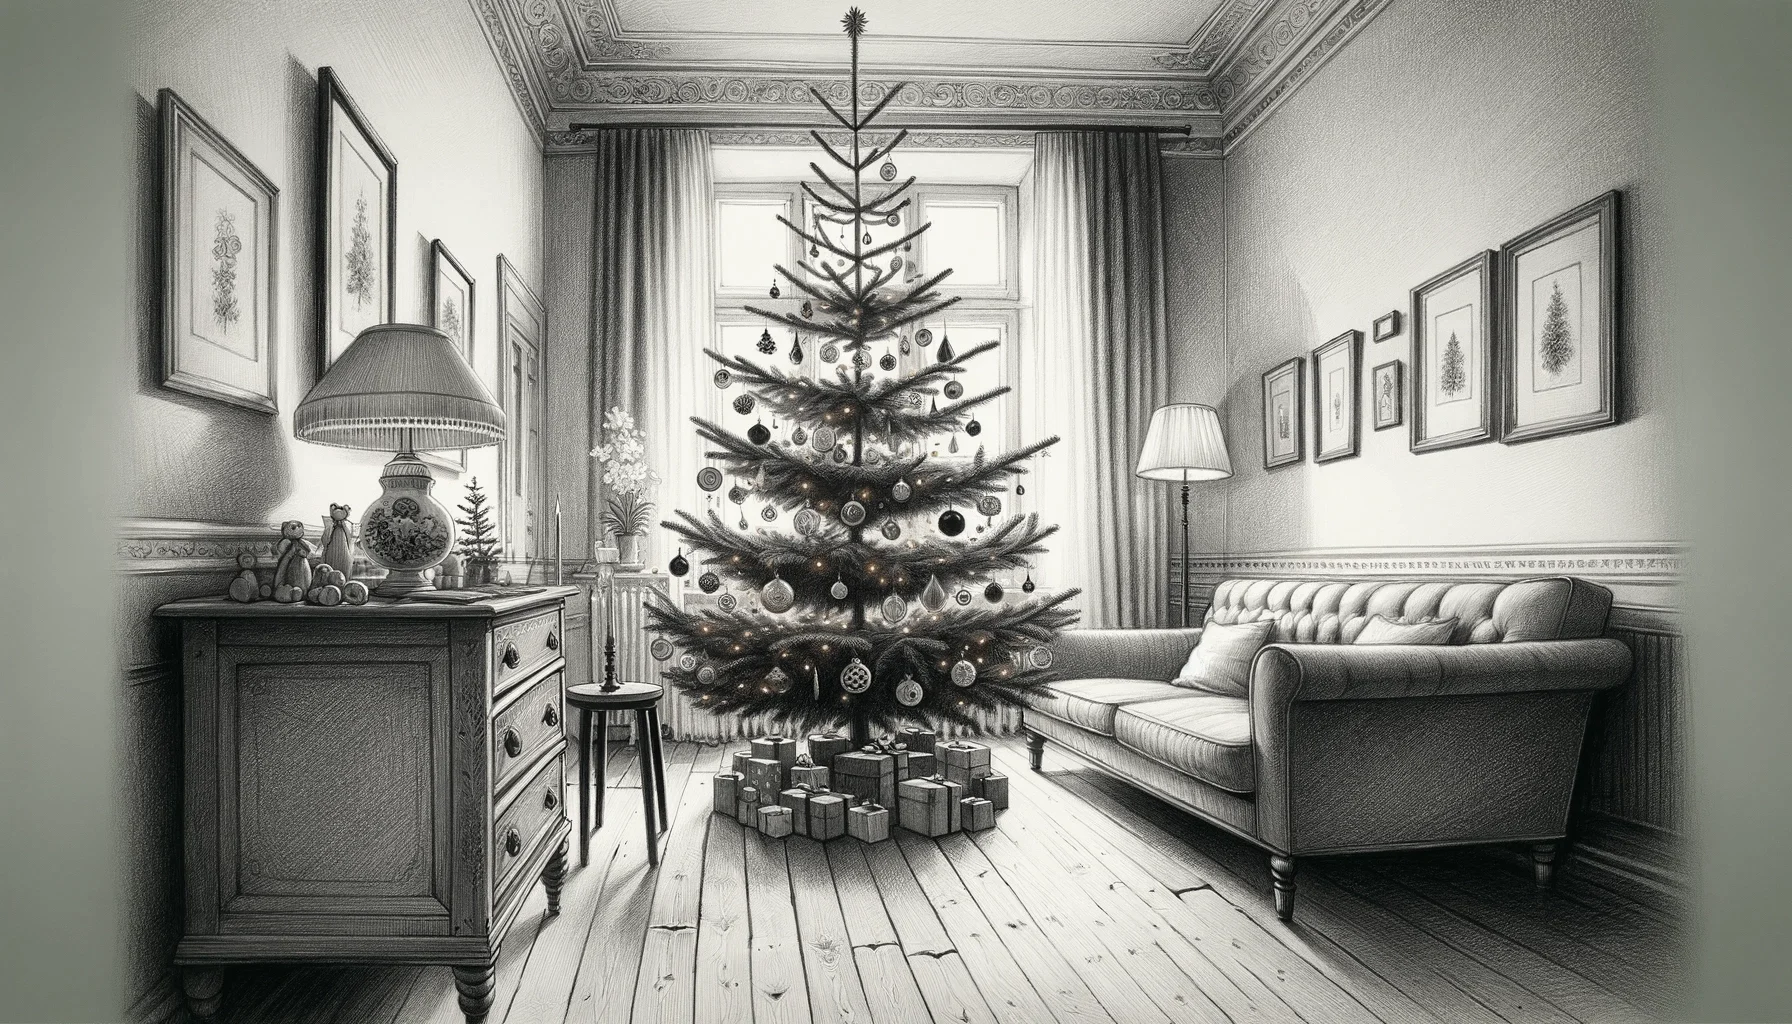 Juletræets historie i Danmark